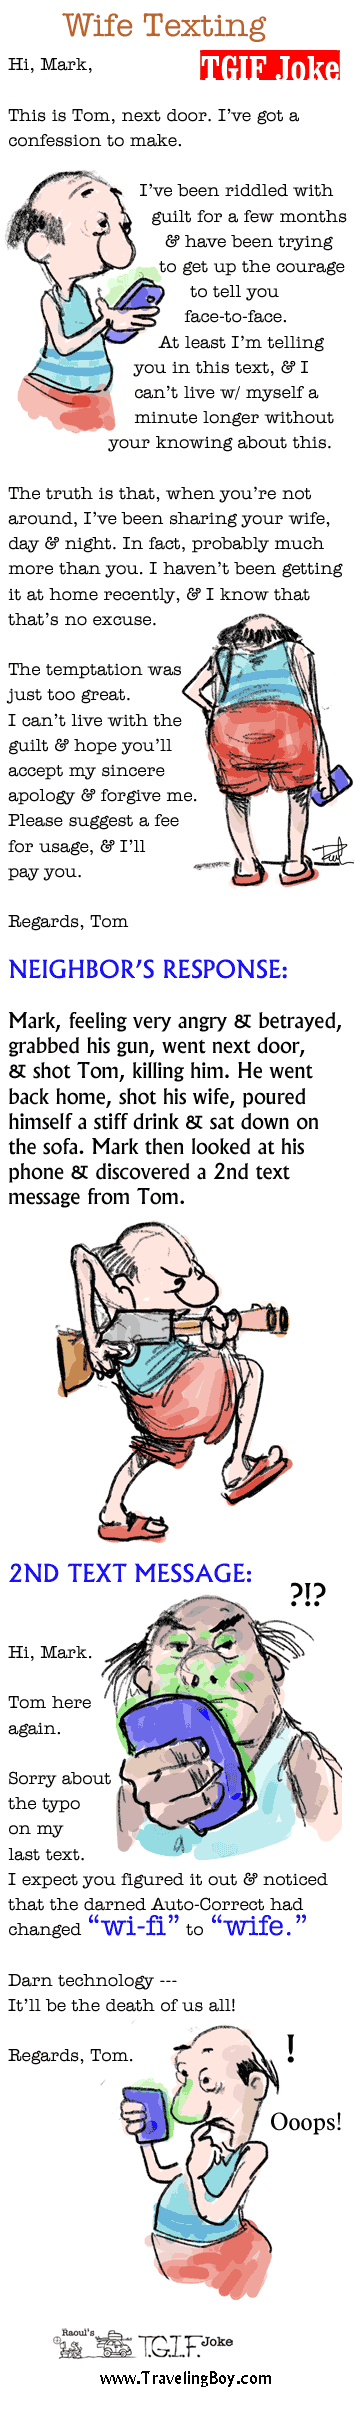 Cartoon of the Week: Wife Texting